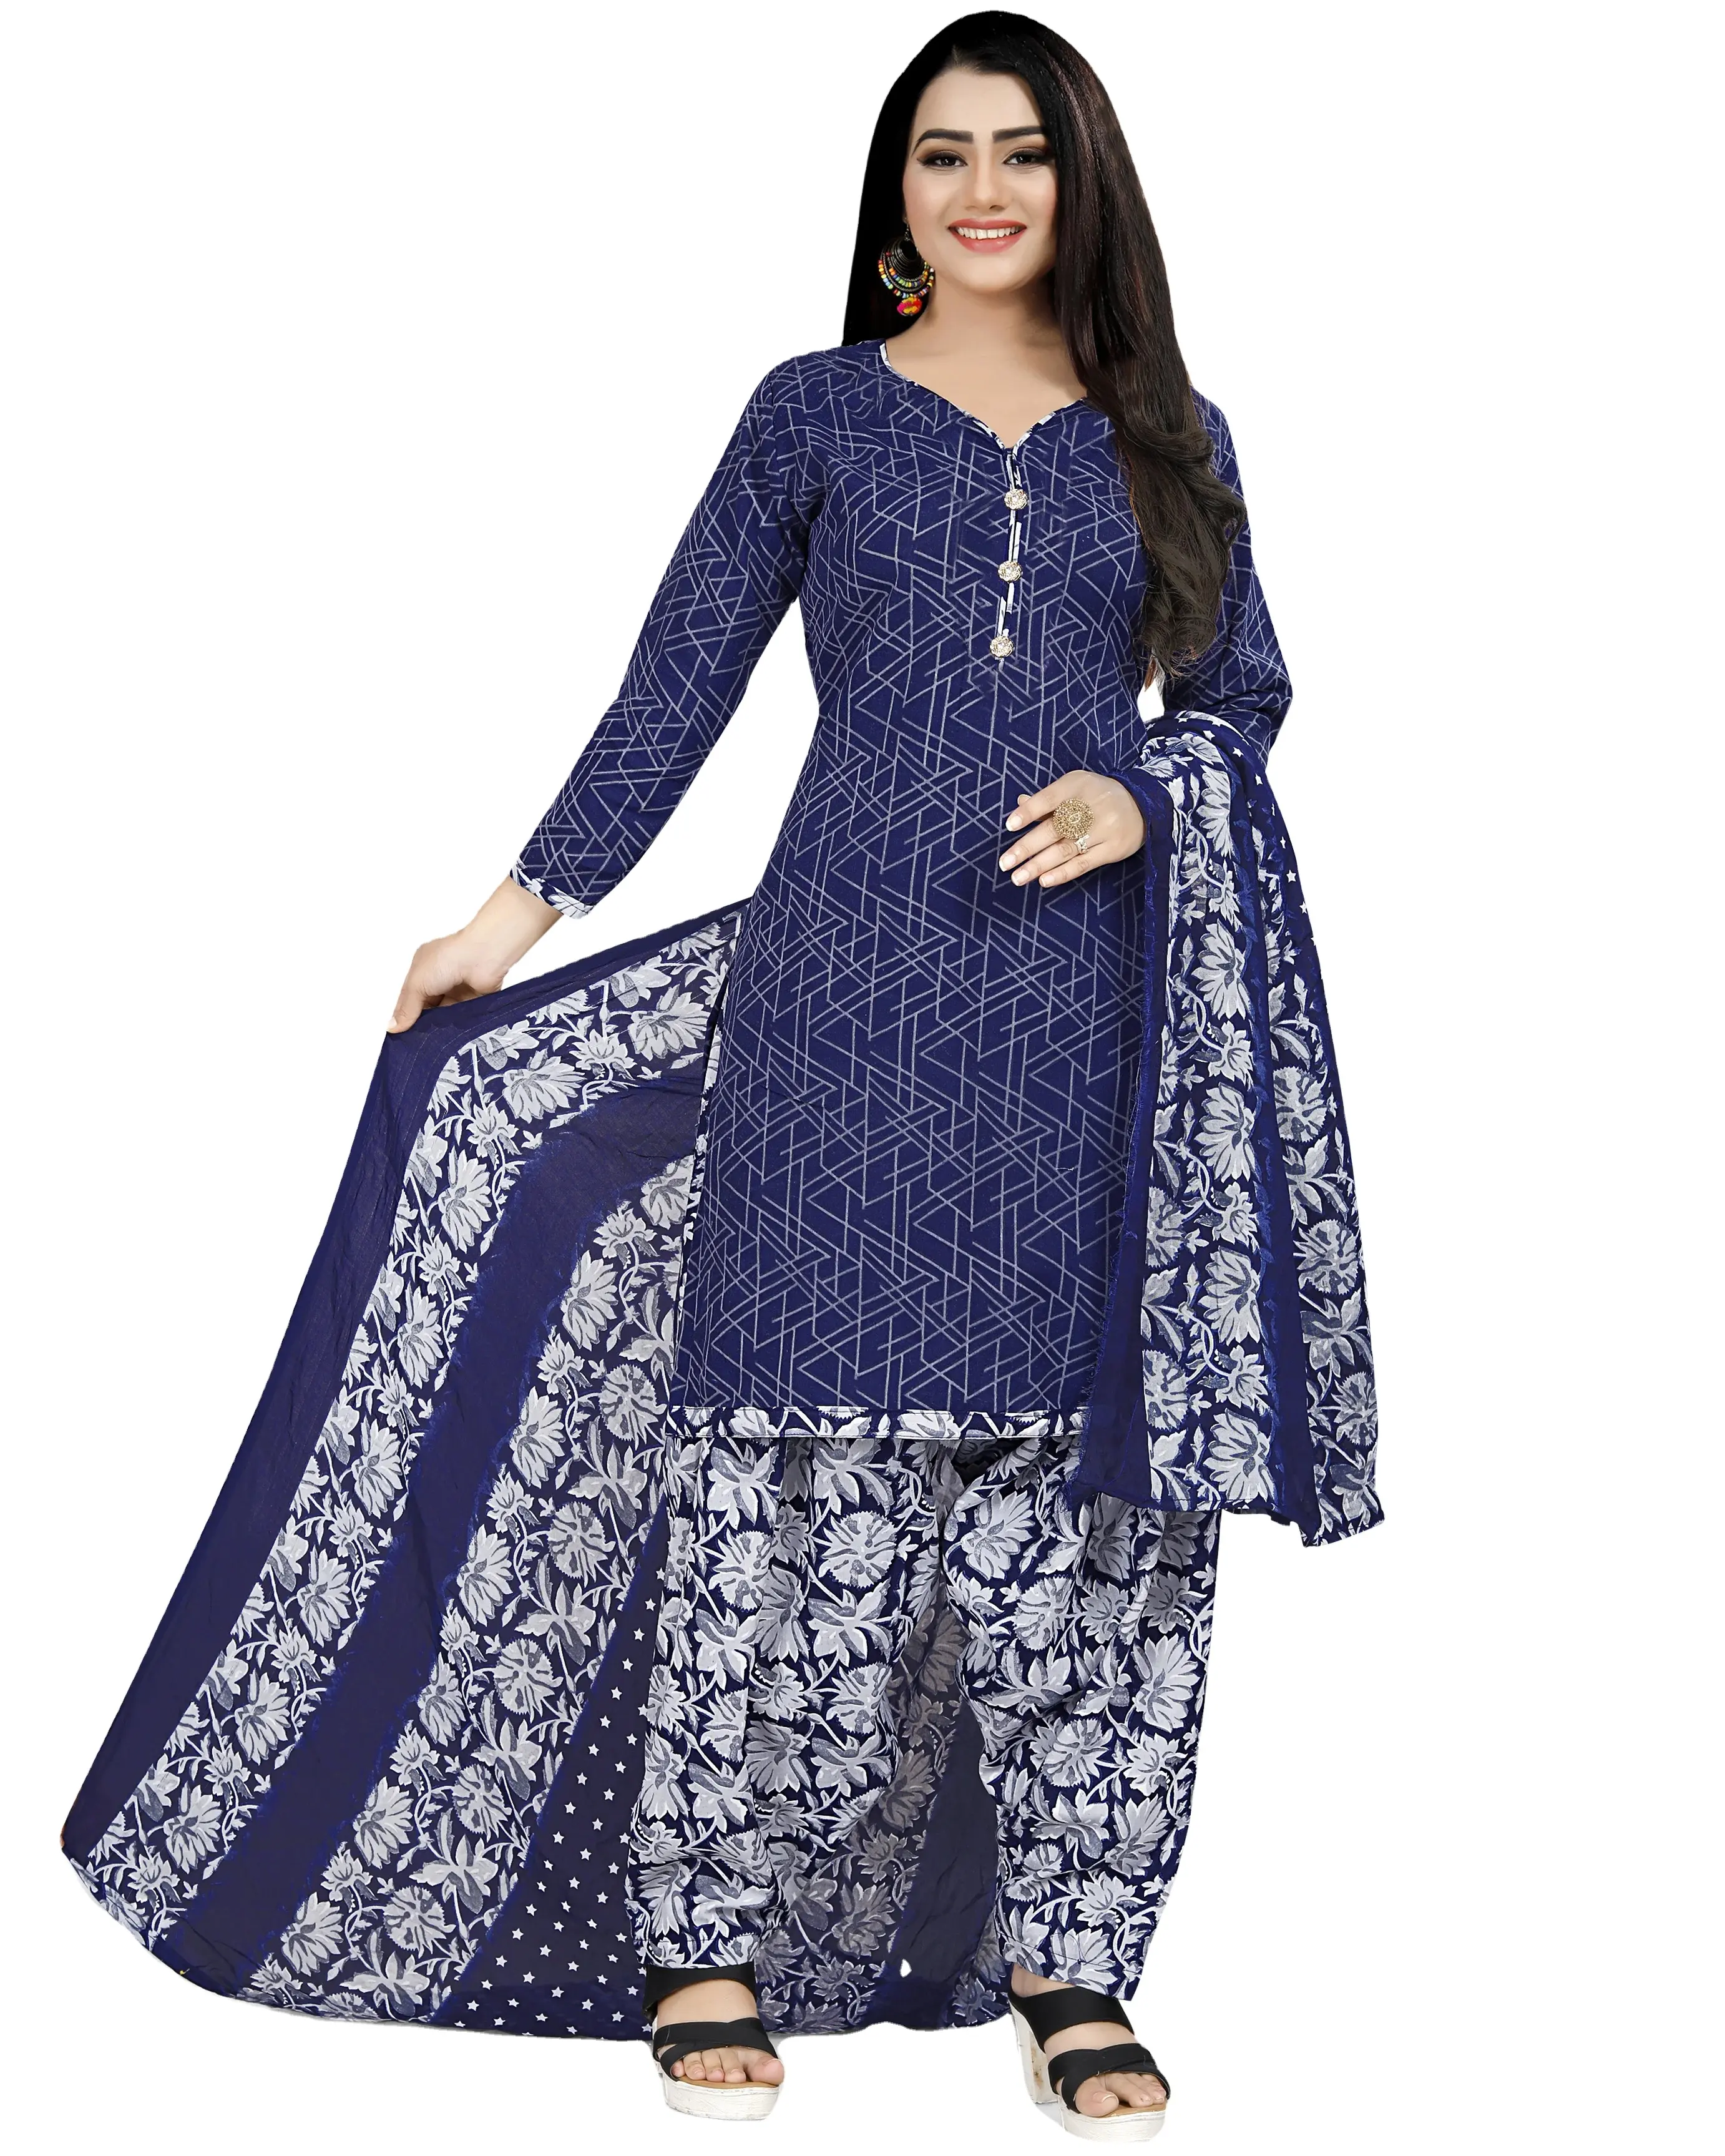 Rajnandini Designer Patiyala Suits for Women daily Wear cotton Salwar Kameez Latest Punjabi Suit reasonable price dresses India